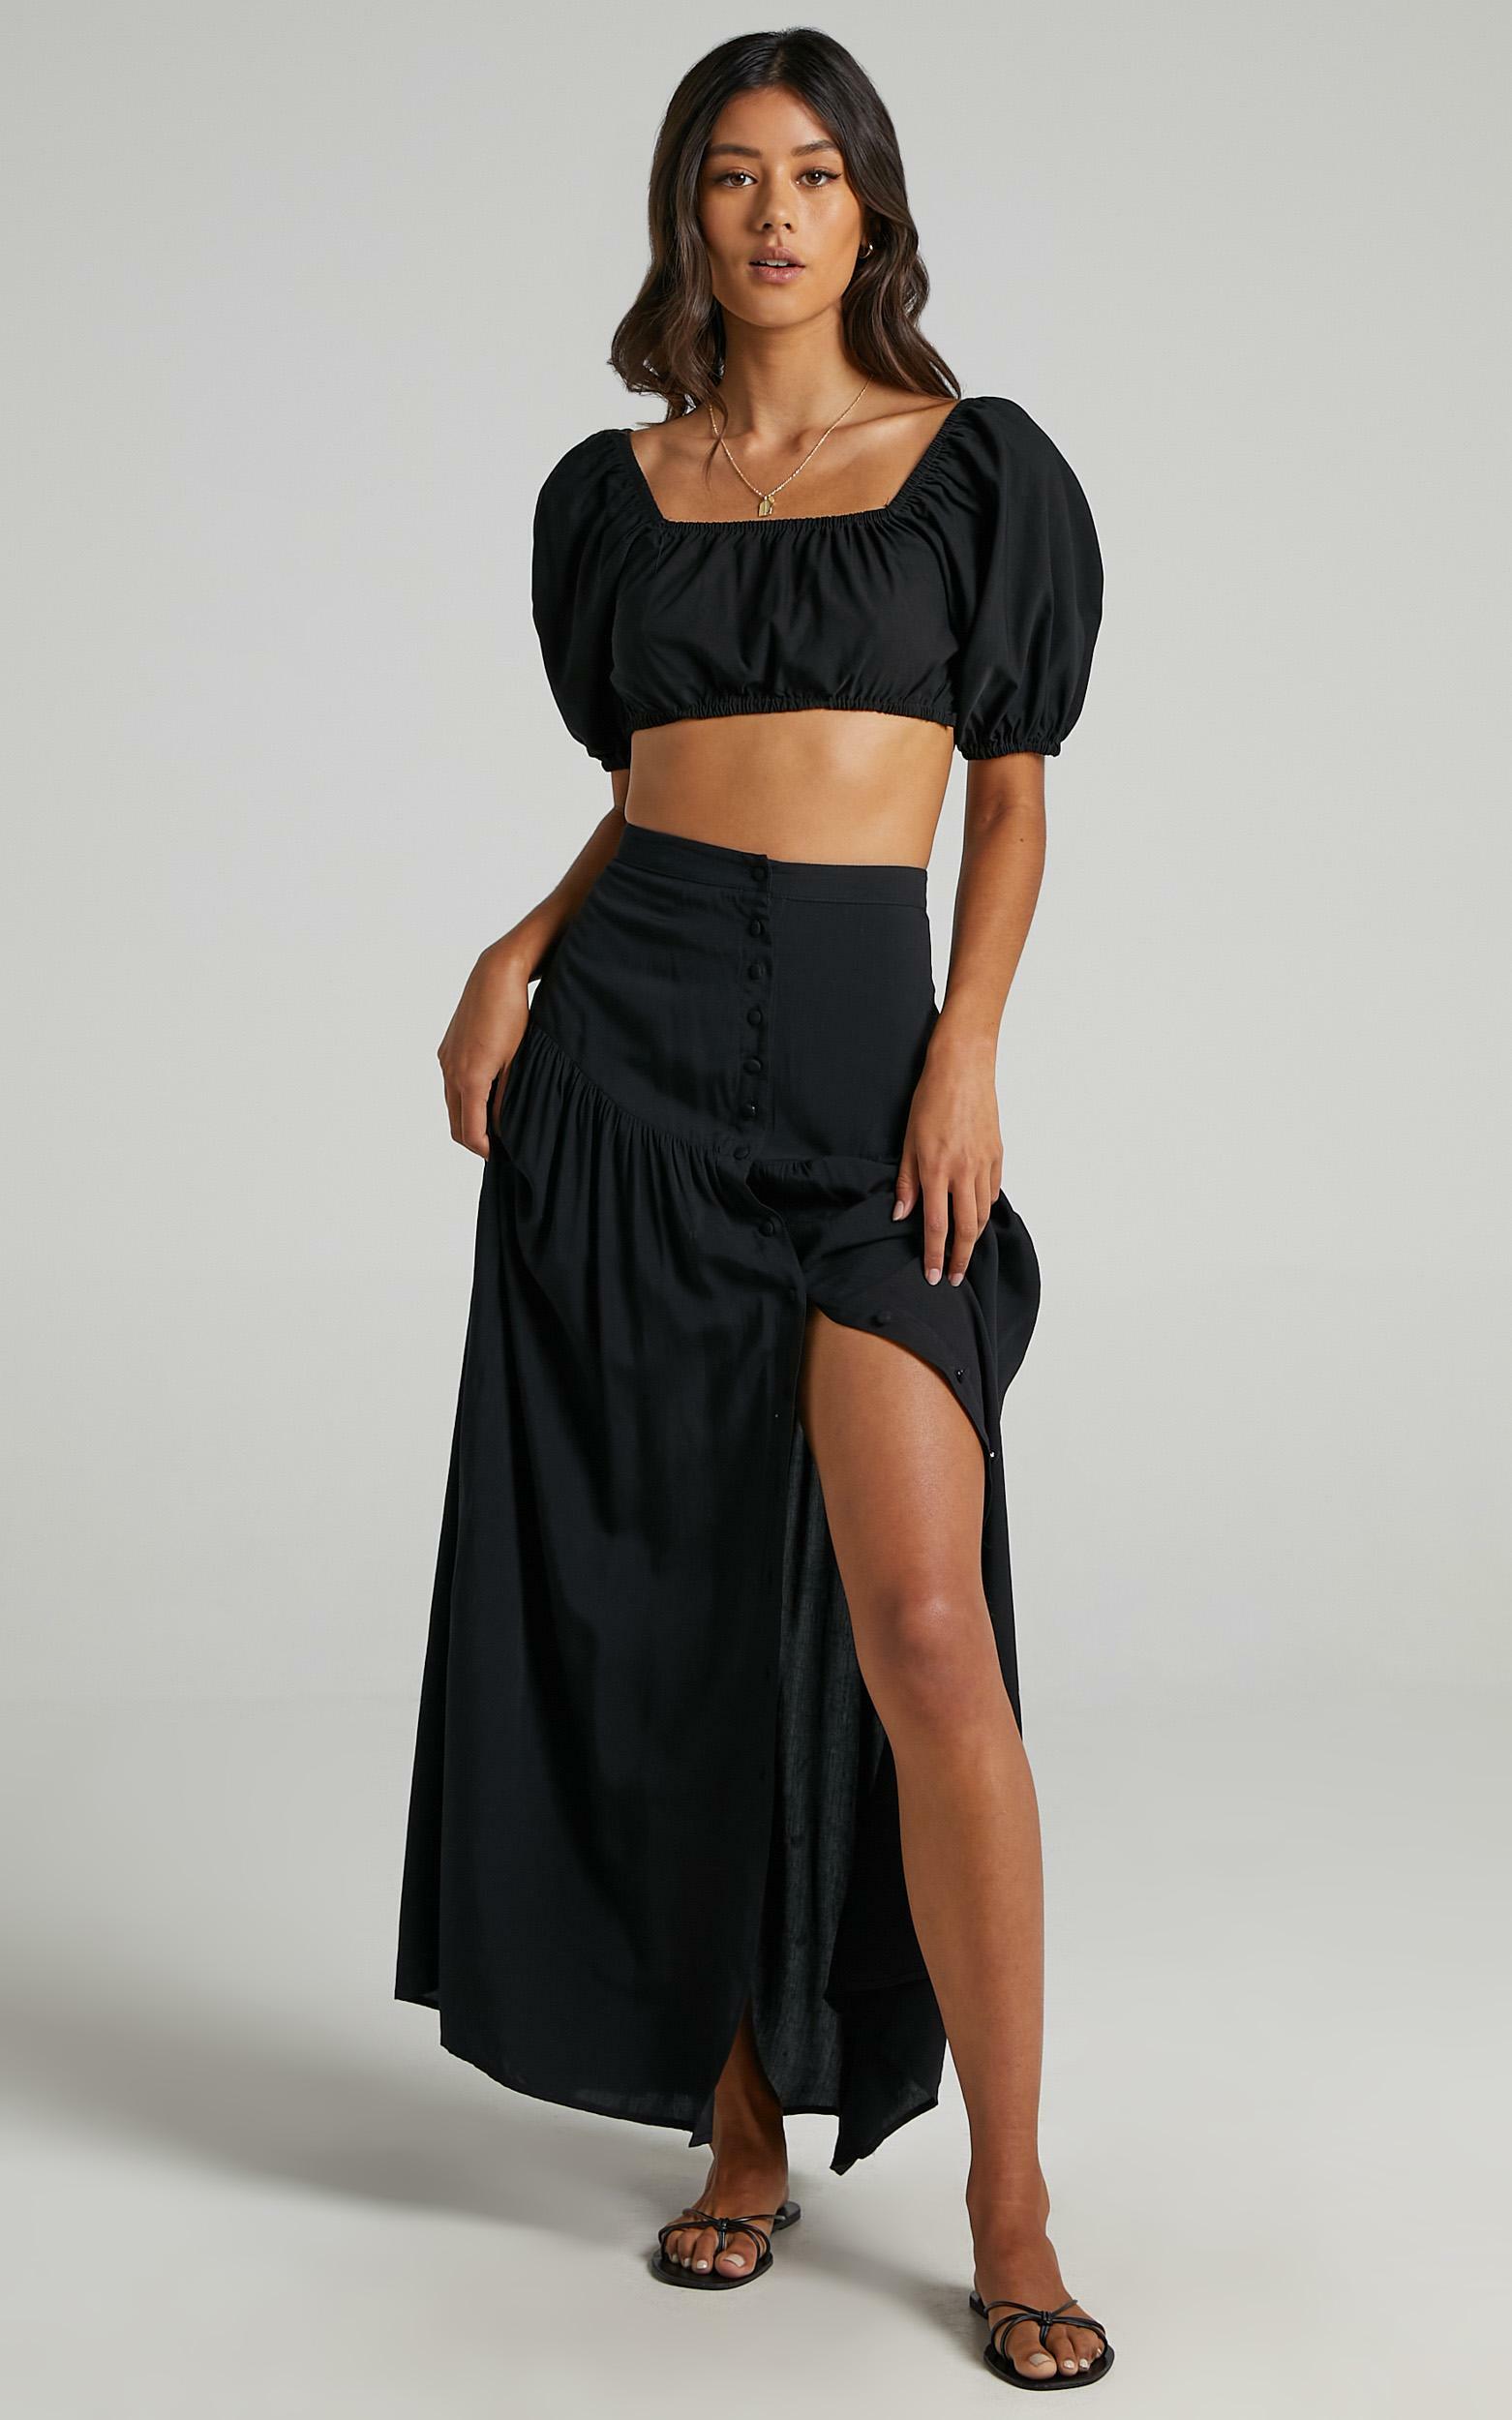 Knoxlee Skirt in Black - 14 (XL), Black, hi-res image number null